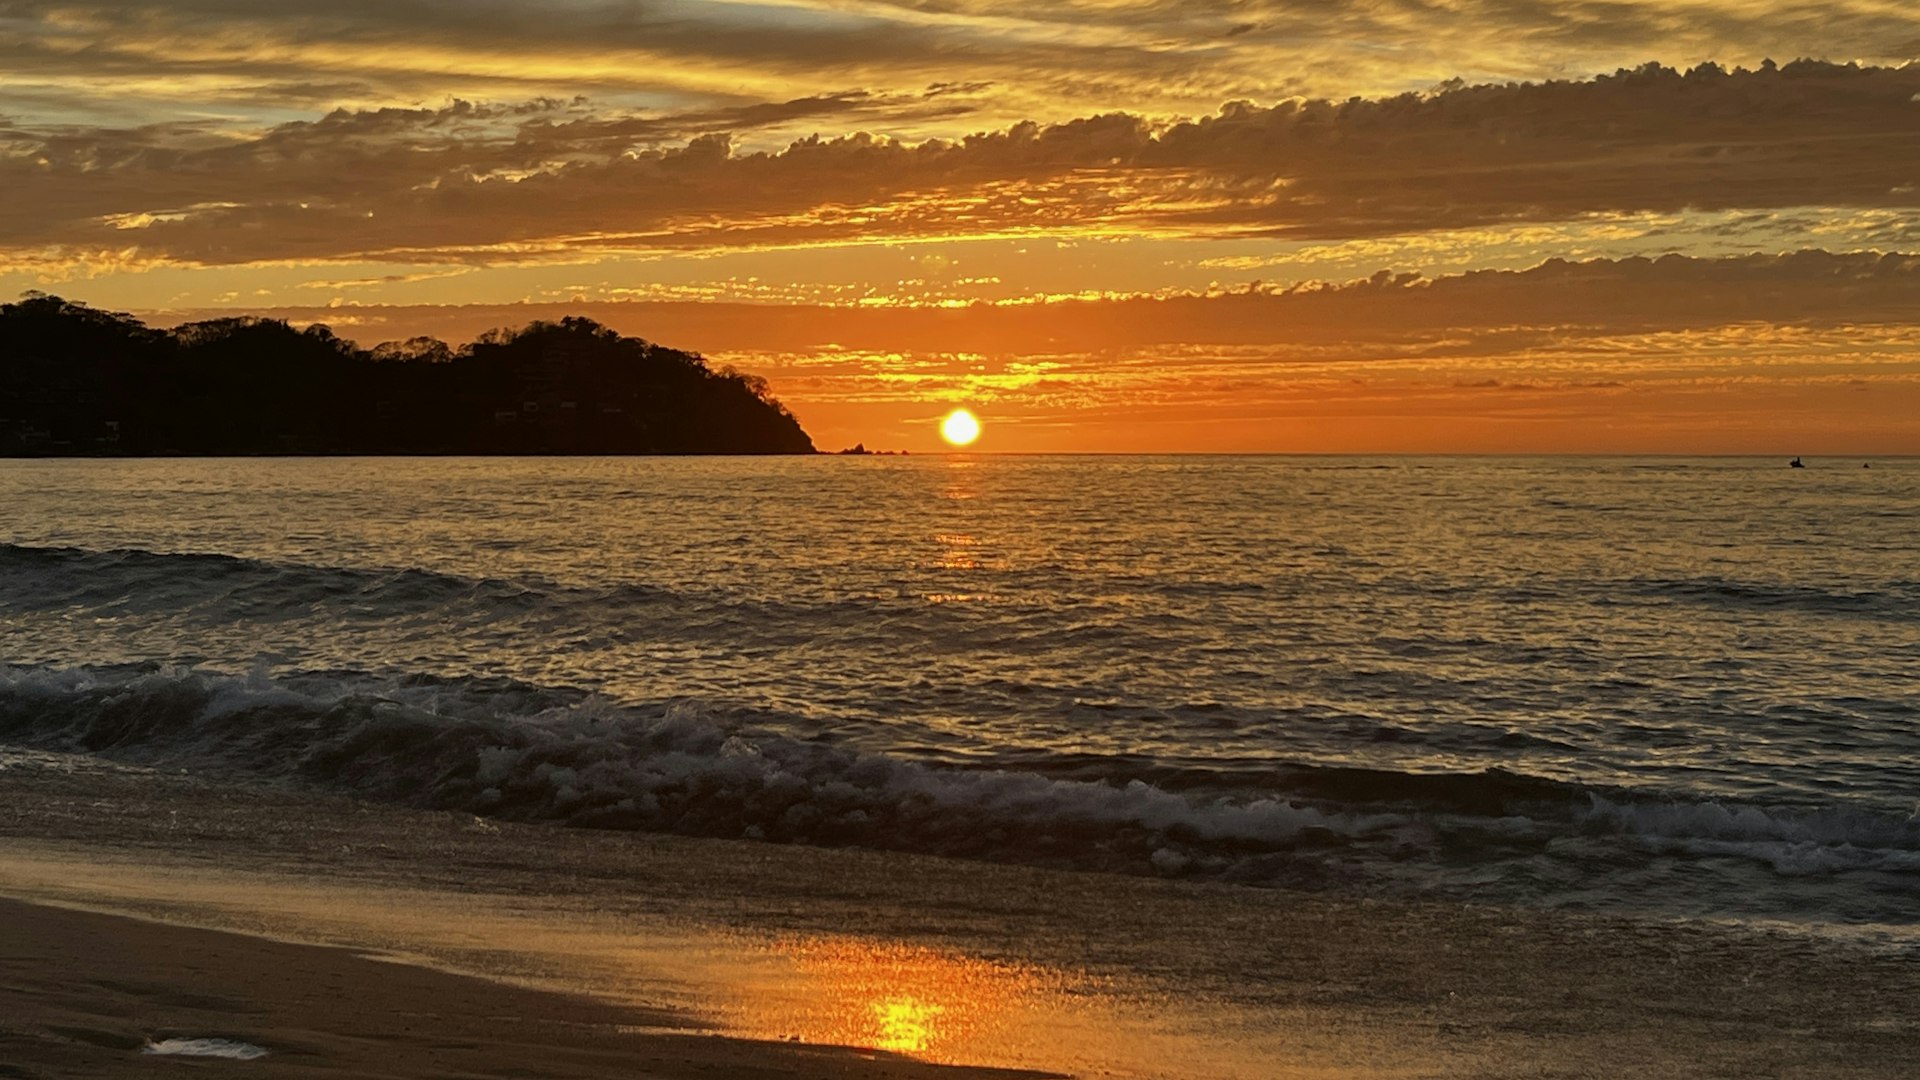 Sunset on a Mexican beach